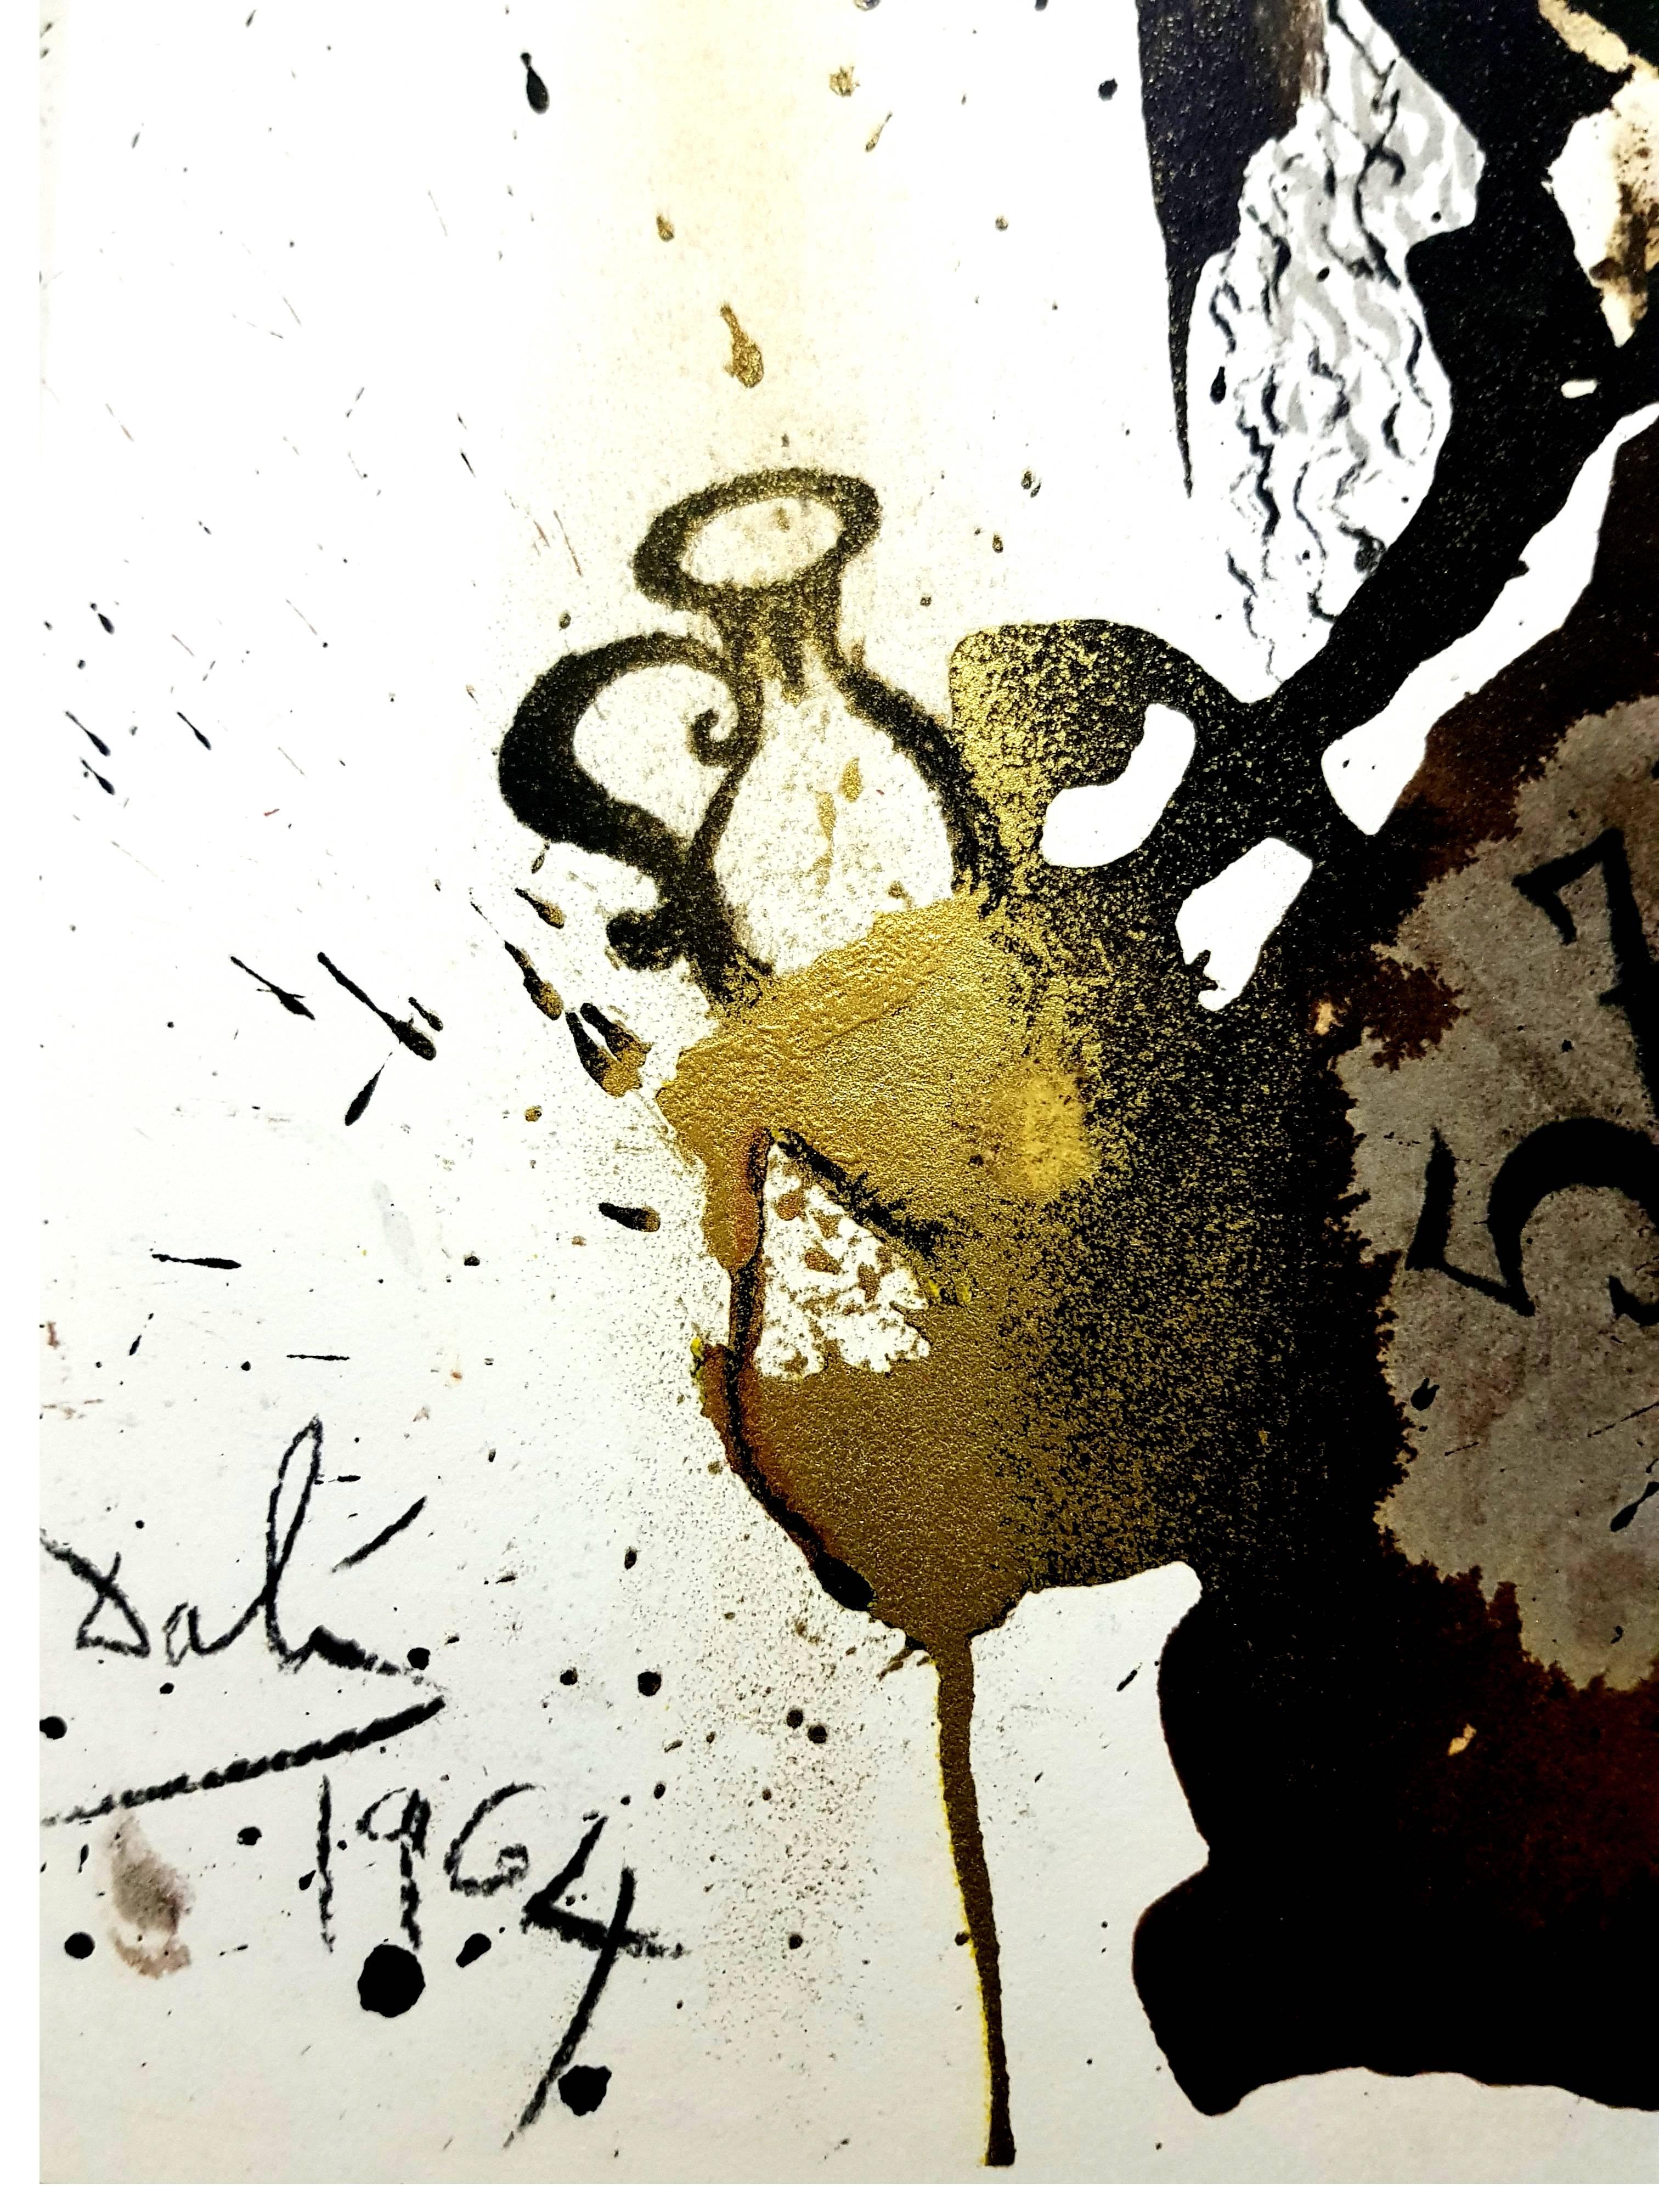 Salvador Dali - Biblia Sacra - Surrealist Print by Salvador Dalí